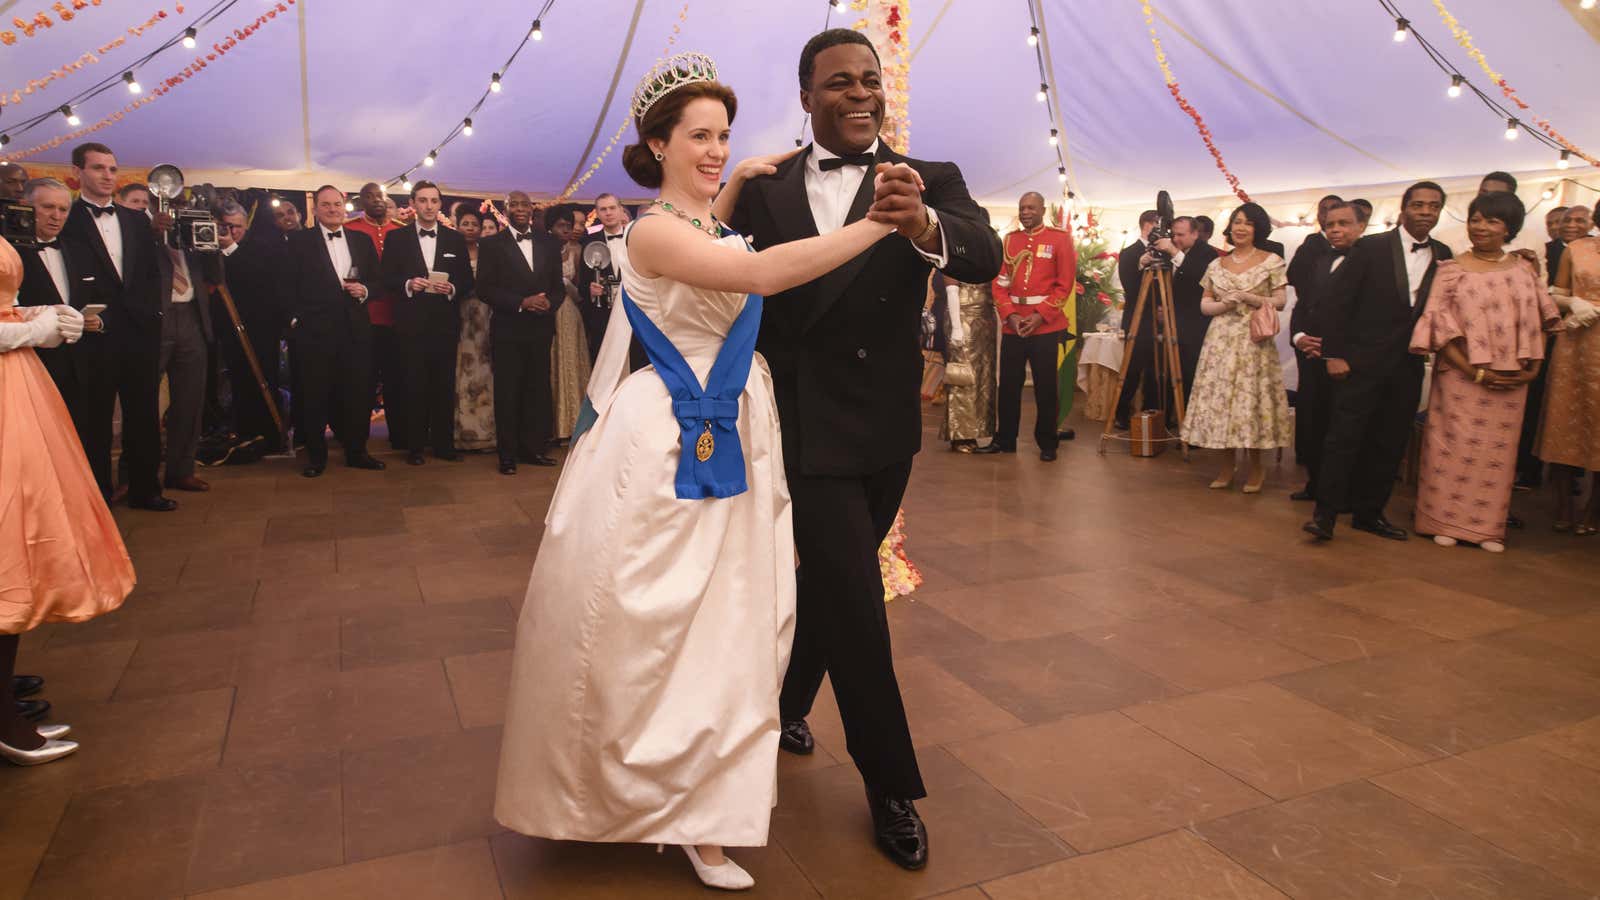 The Crown – Elizabeth, Nkrumah – Queen Elizabeth II and Nkrumah dance at a ball